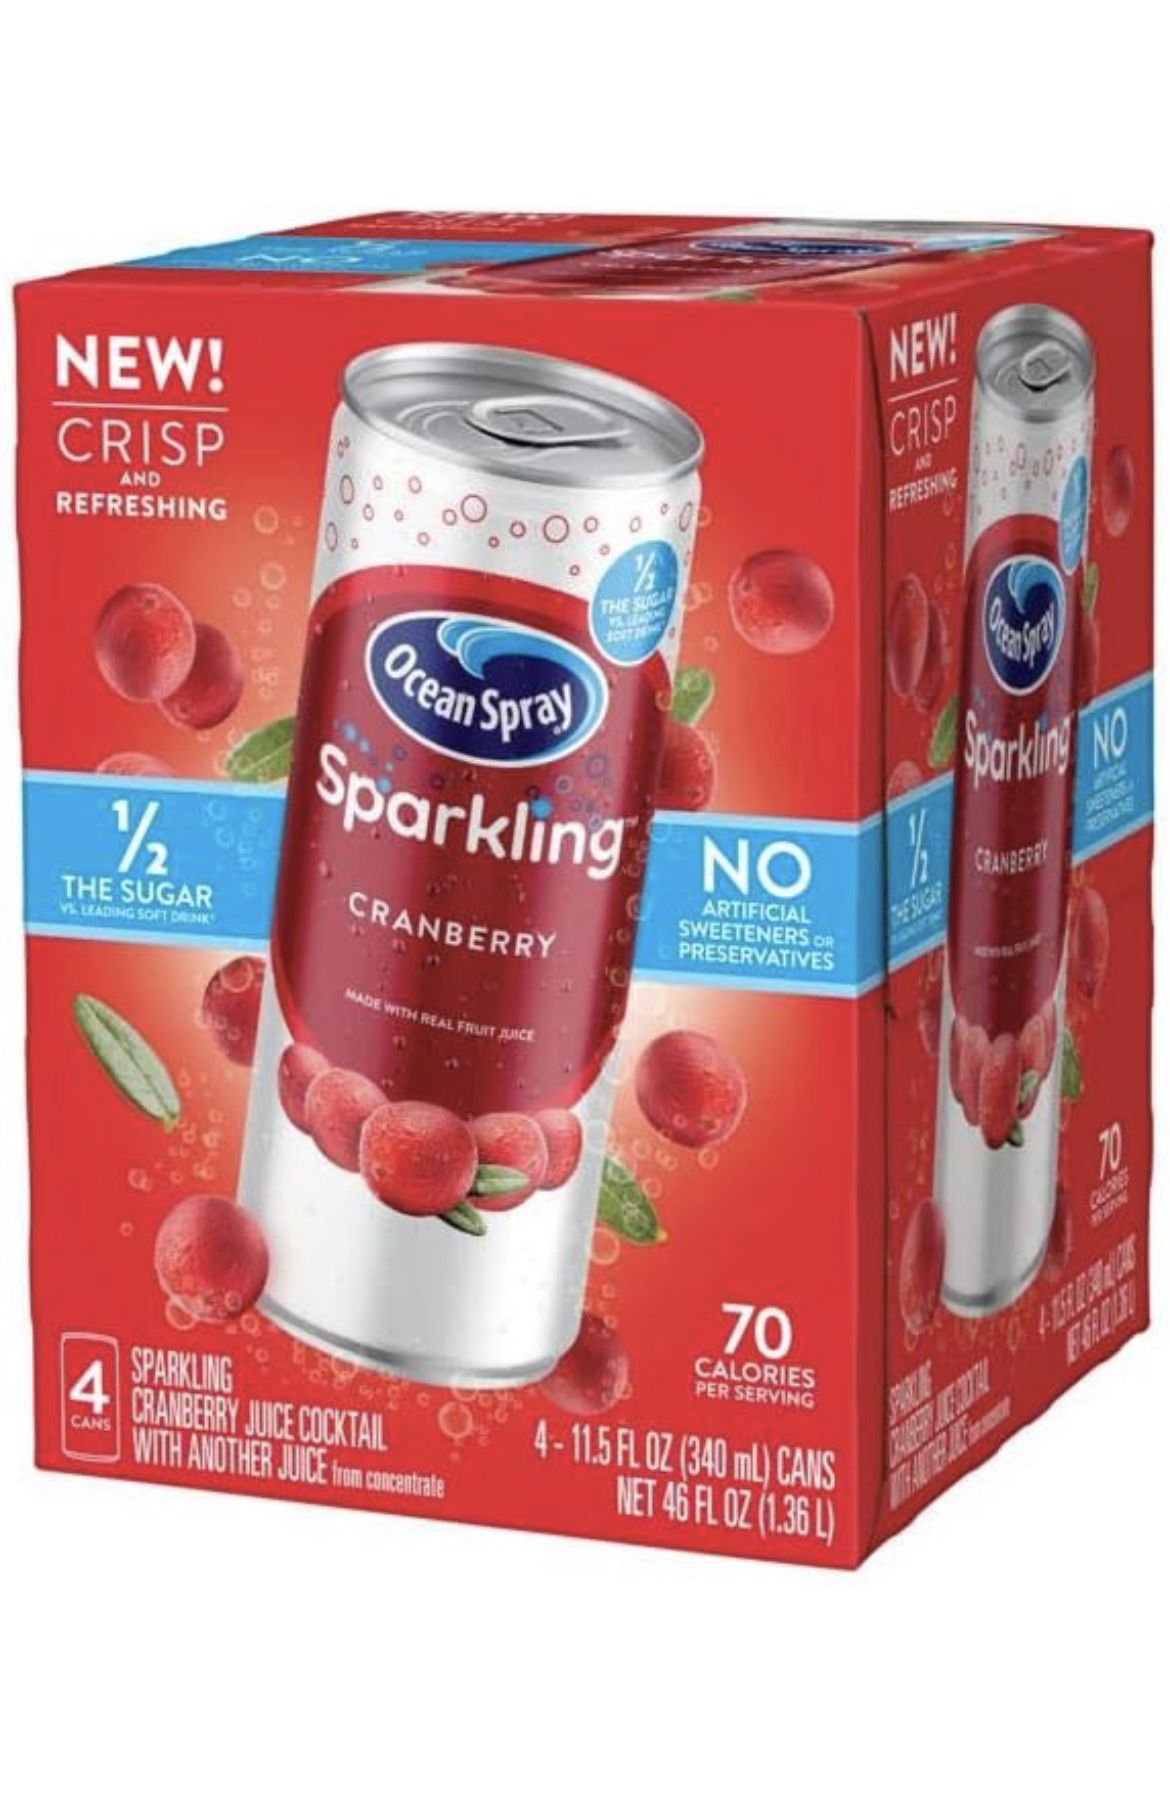 Sparkling Cranberry Juice